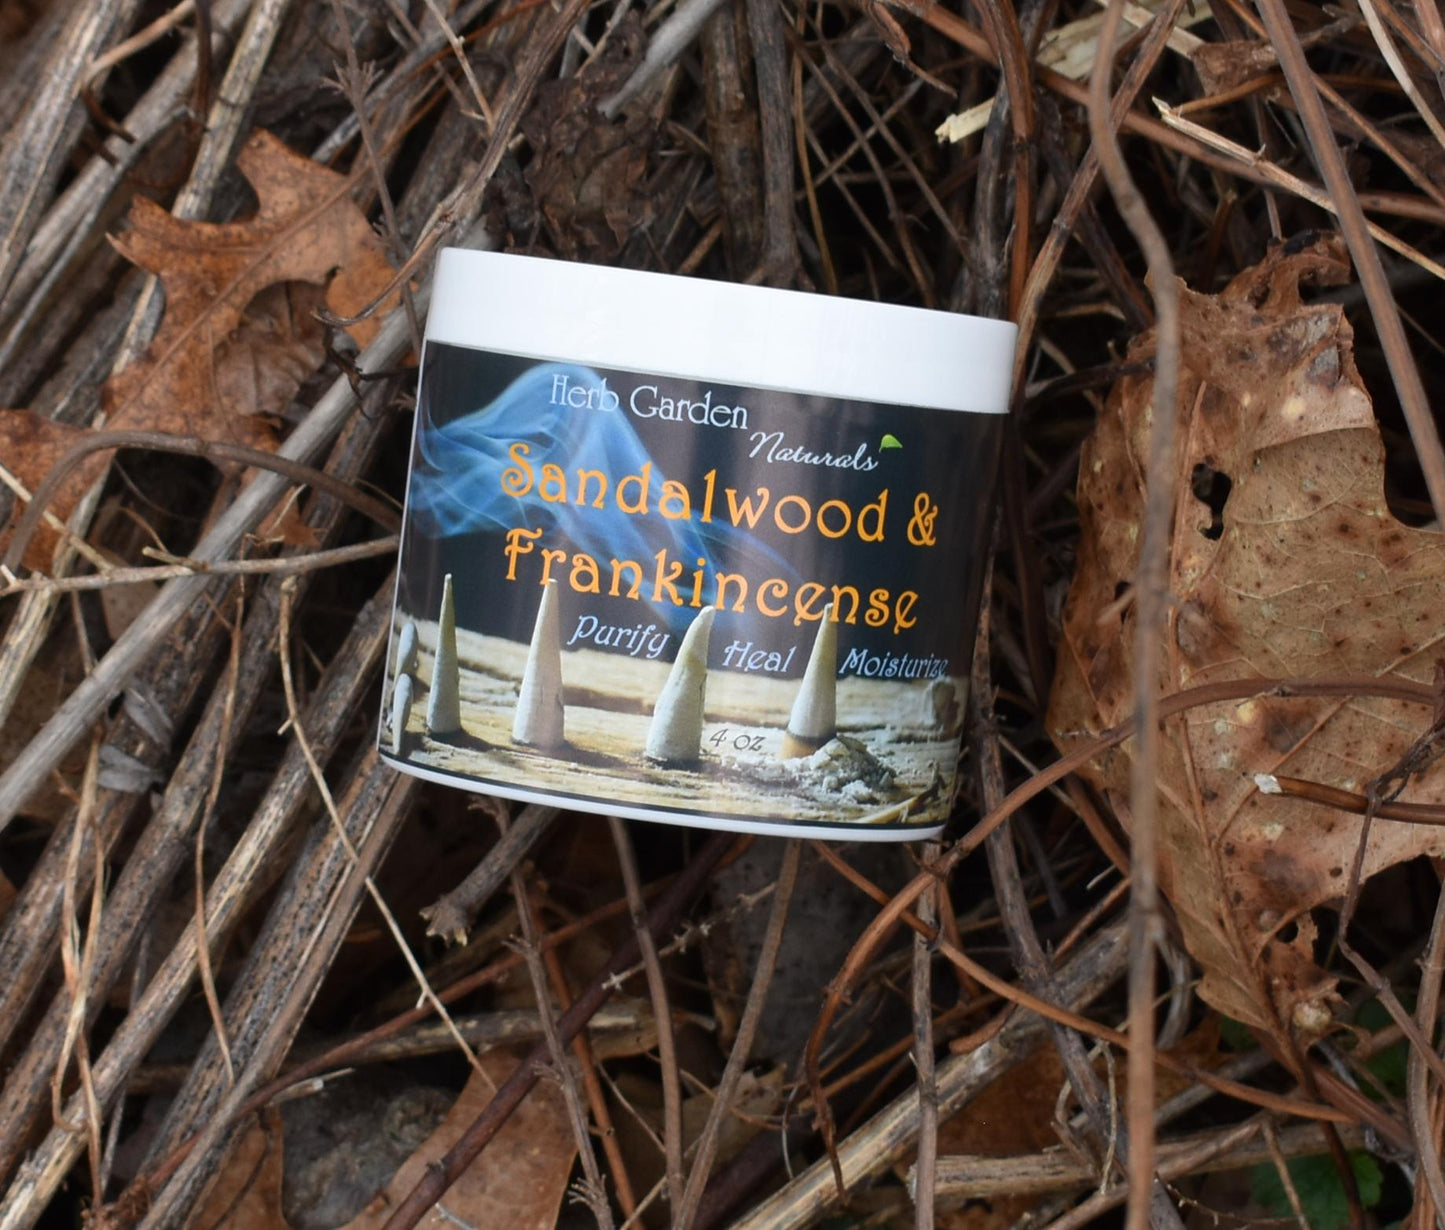 Sandalwood & Frankincense Organic Body Cream